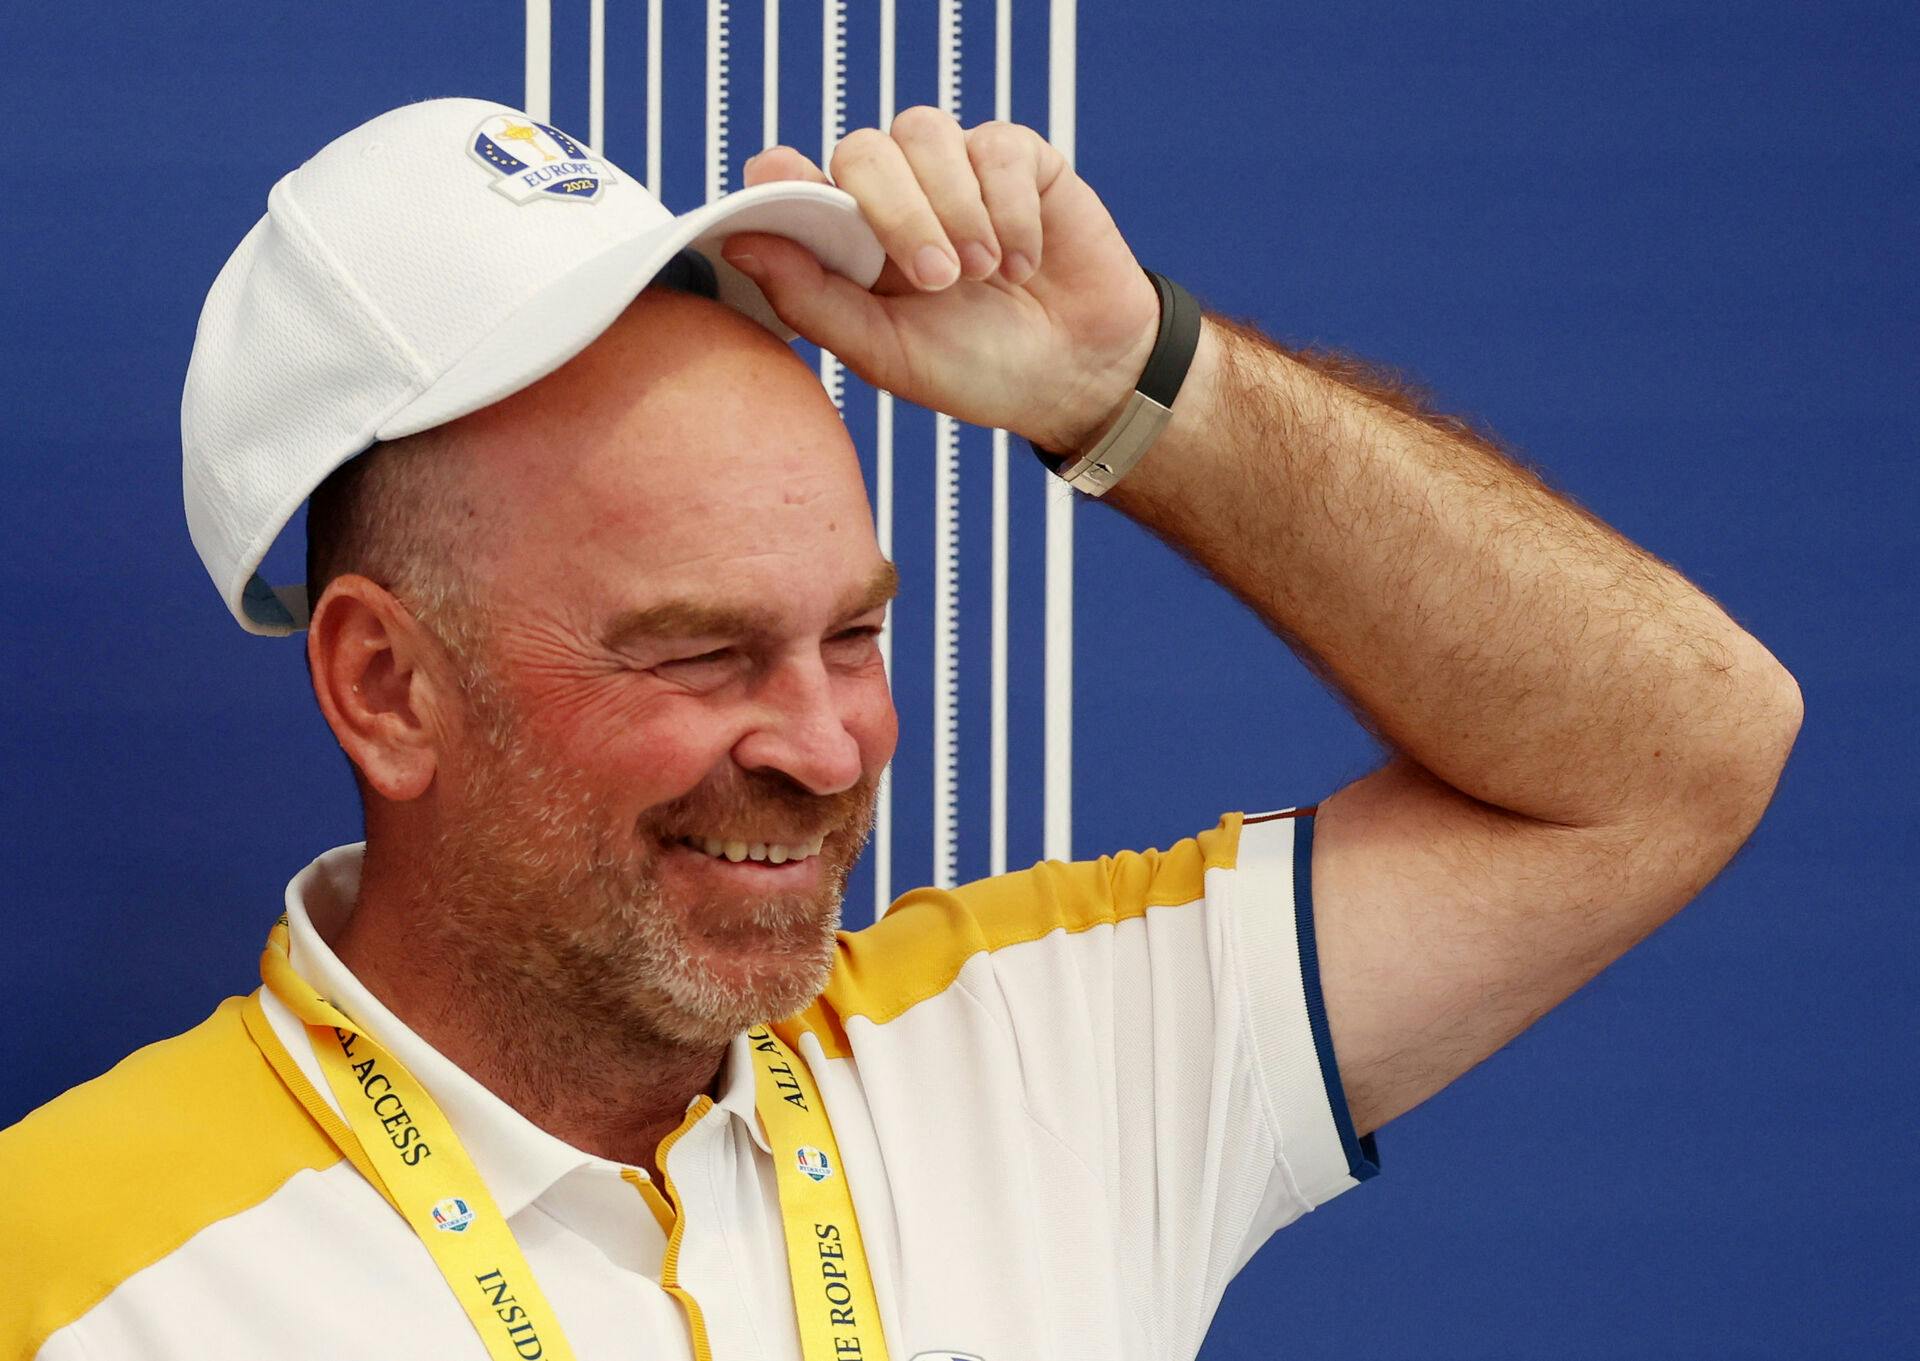 De fire danske golfspillere, der skal repræsentere Danmark ved OL til sommer, får Thomas Bjørn som kaptajn.